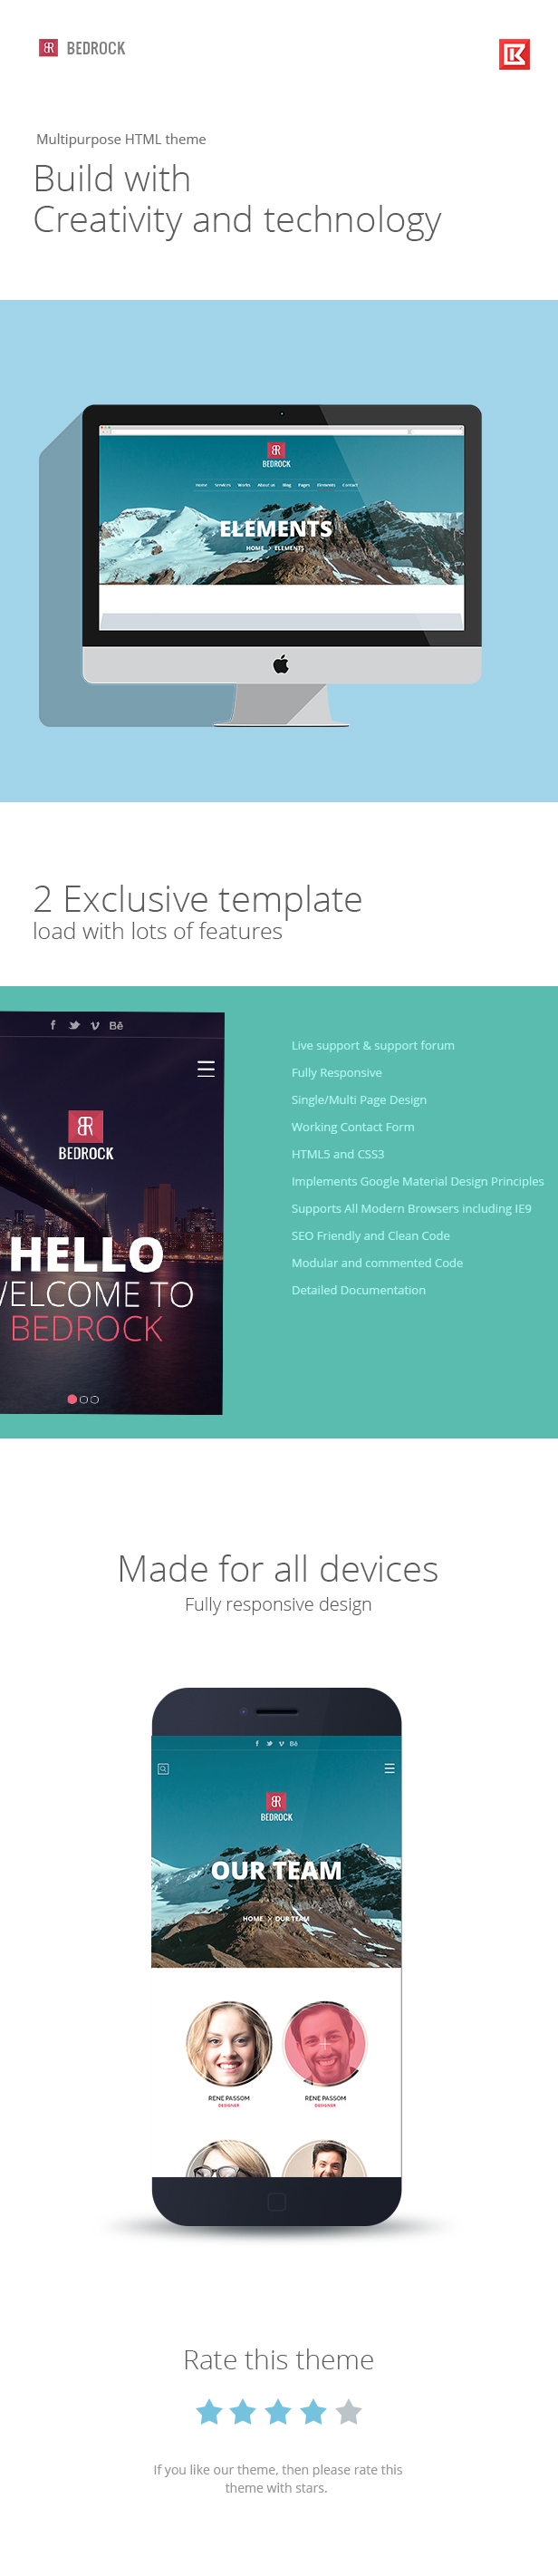 Bedrock | Multipurpose HTML Template - 3